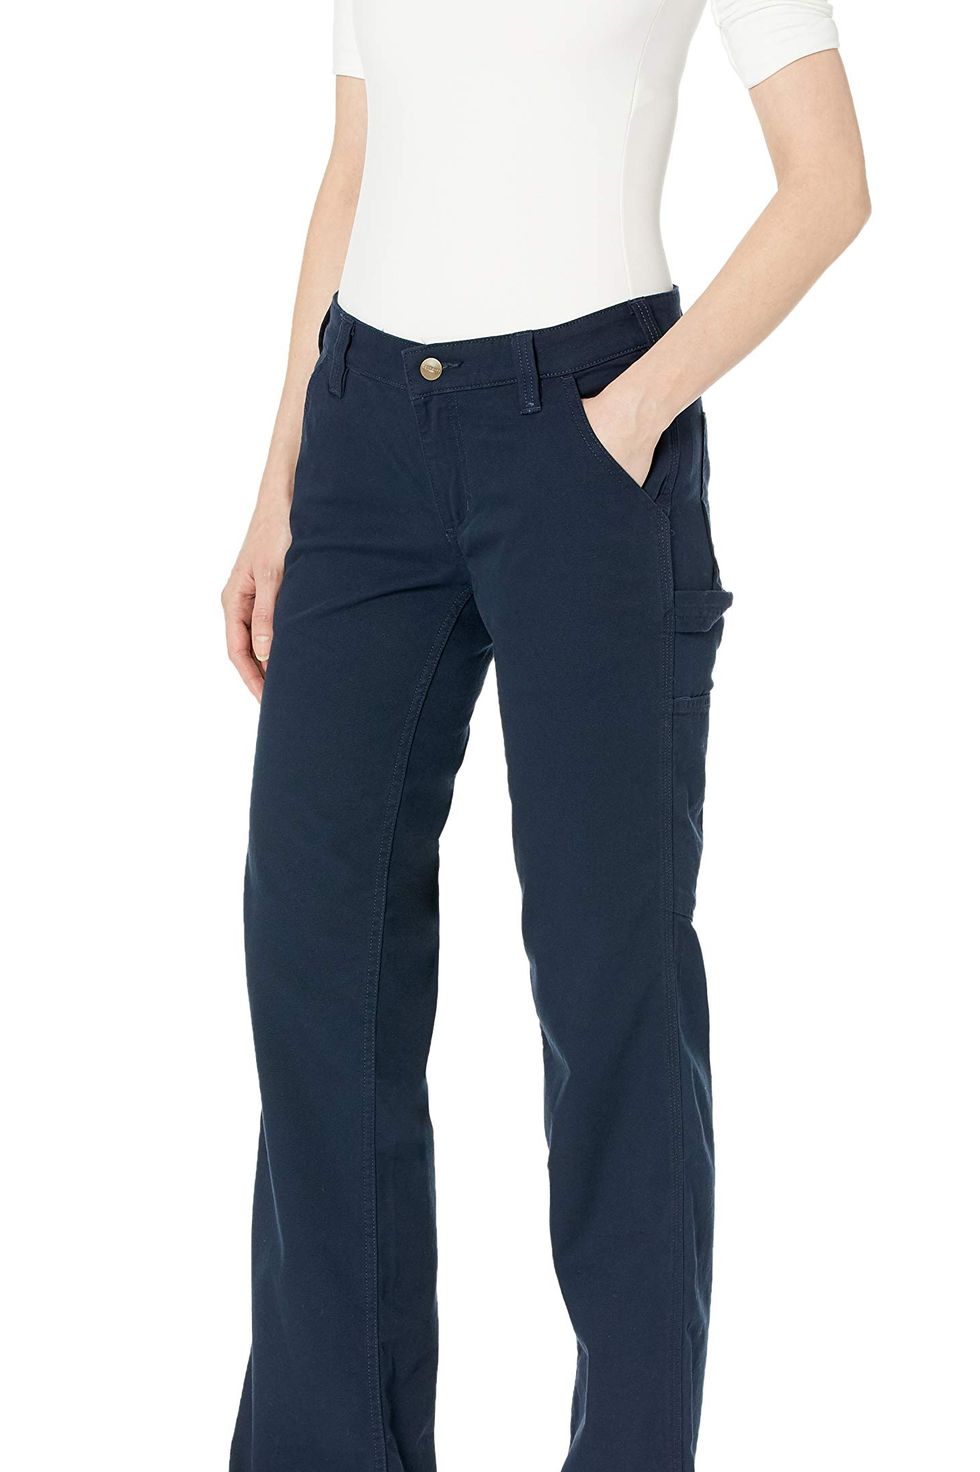 2023 new women's pants navy blue professional pants bank work